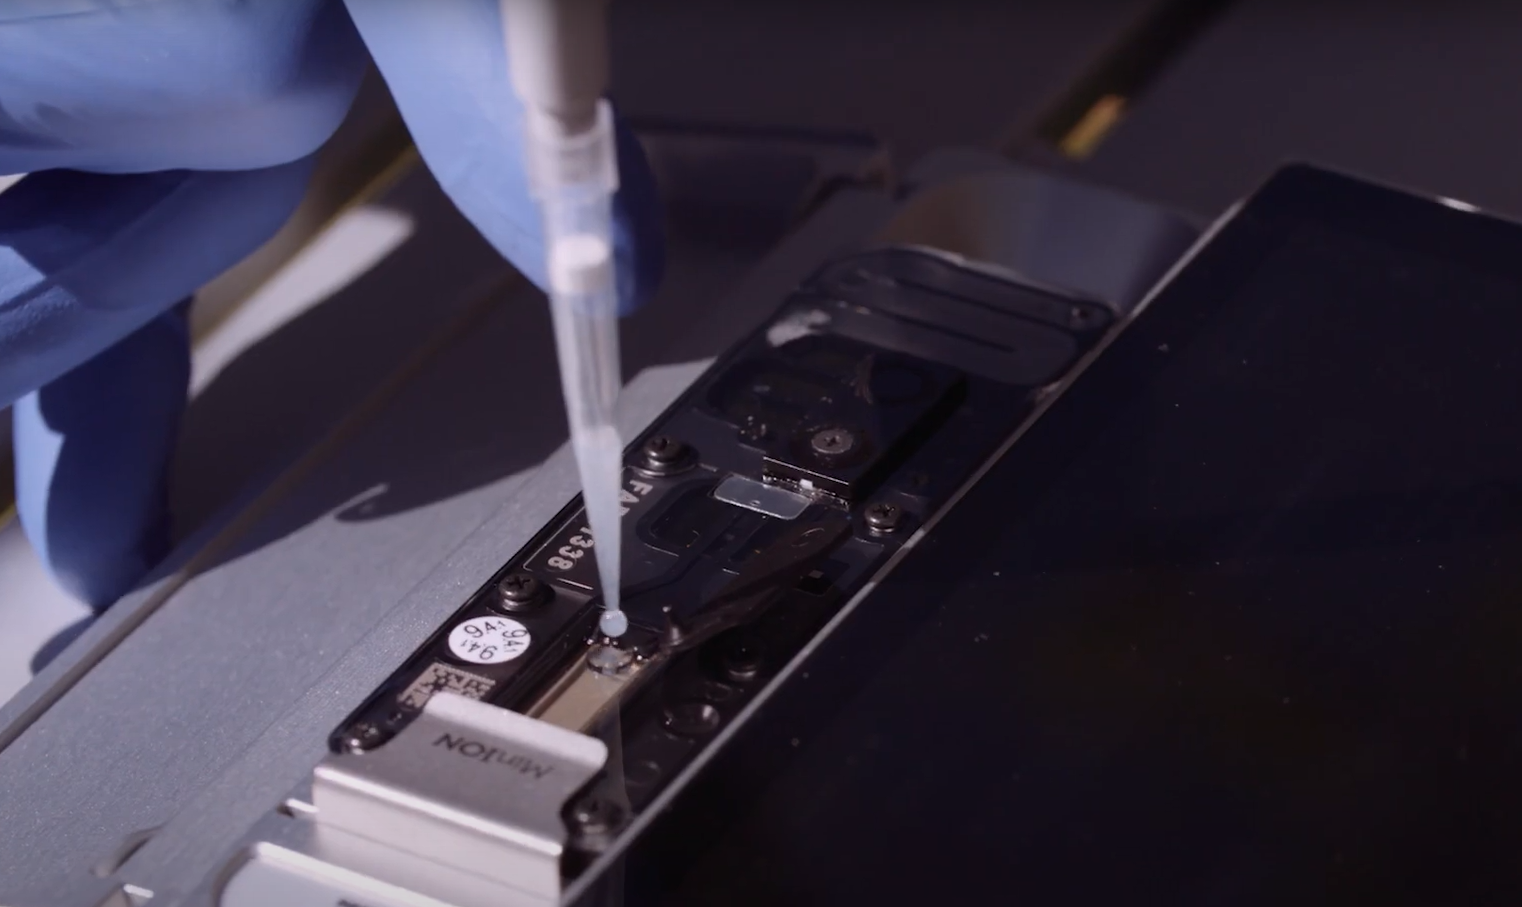 The Oxford Nanopore Technologies Minion Sequencing Device